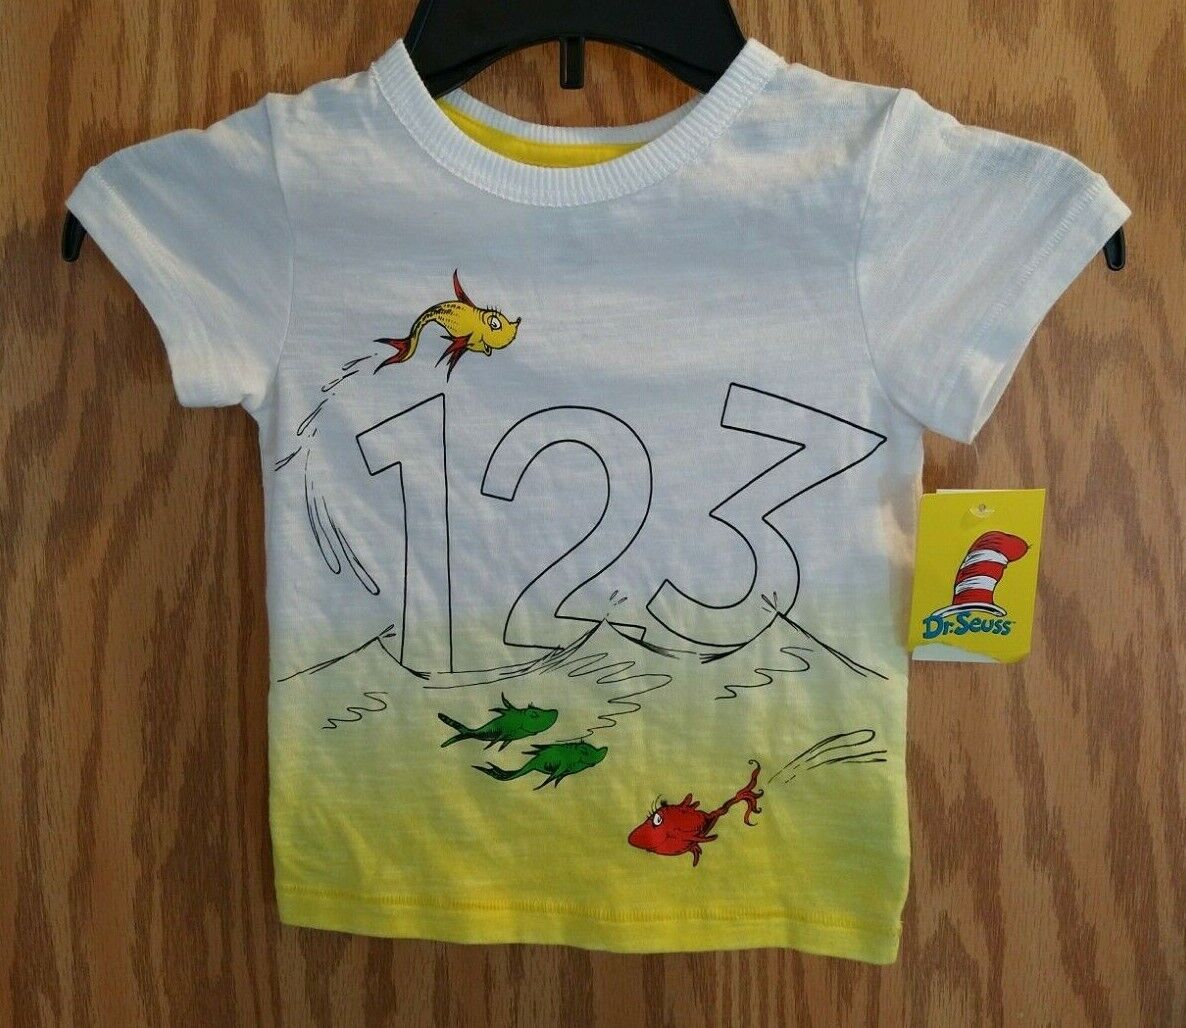 Boys shirt SZ 18 Mons Dr Seuss Short Sleeve One Fish Two Fish Shirt T-Shirt New